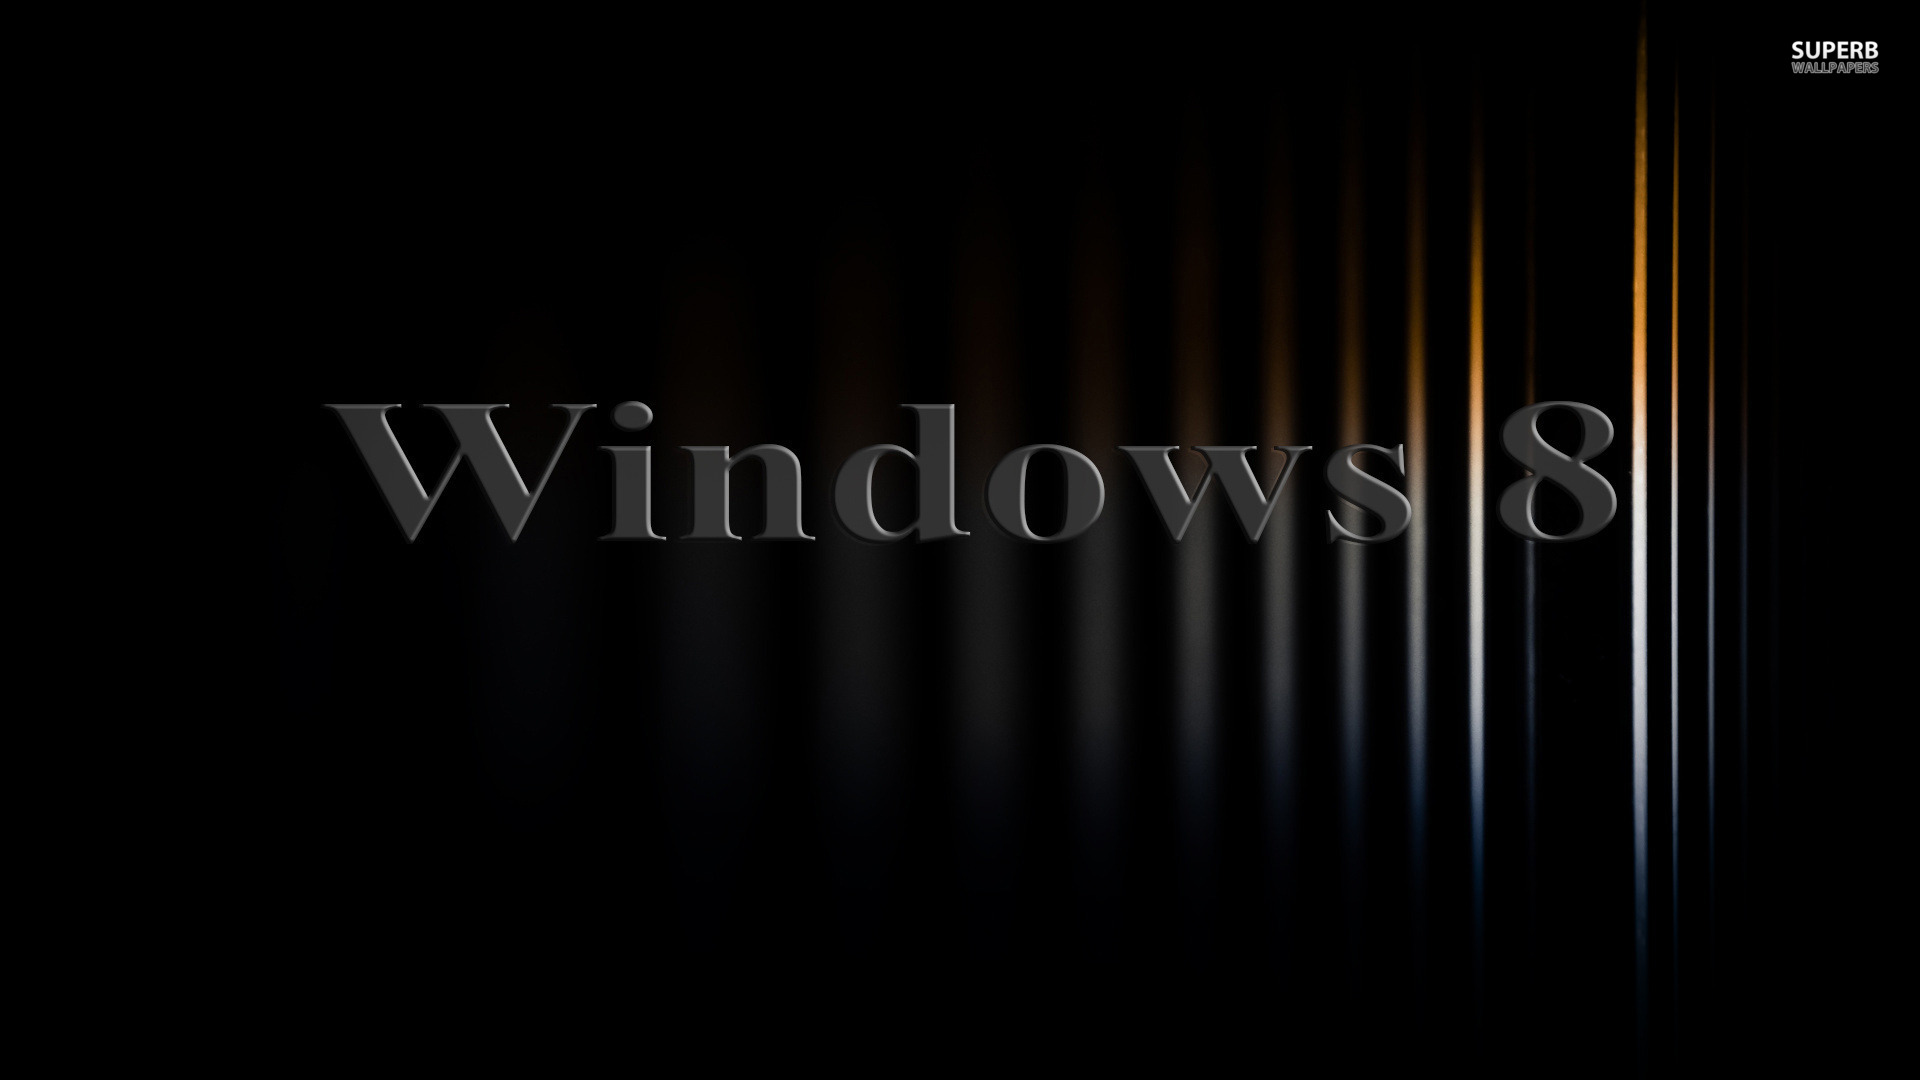 Windows 8 in Dark Wallpaper - MixHD wallpapers